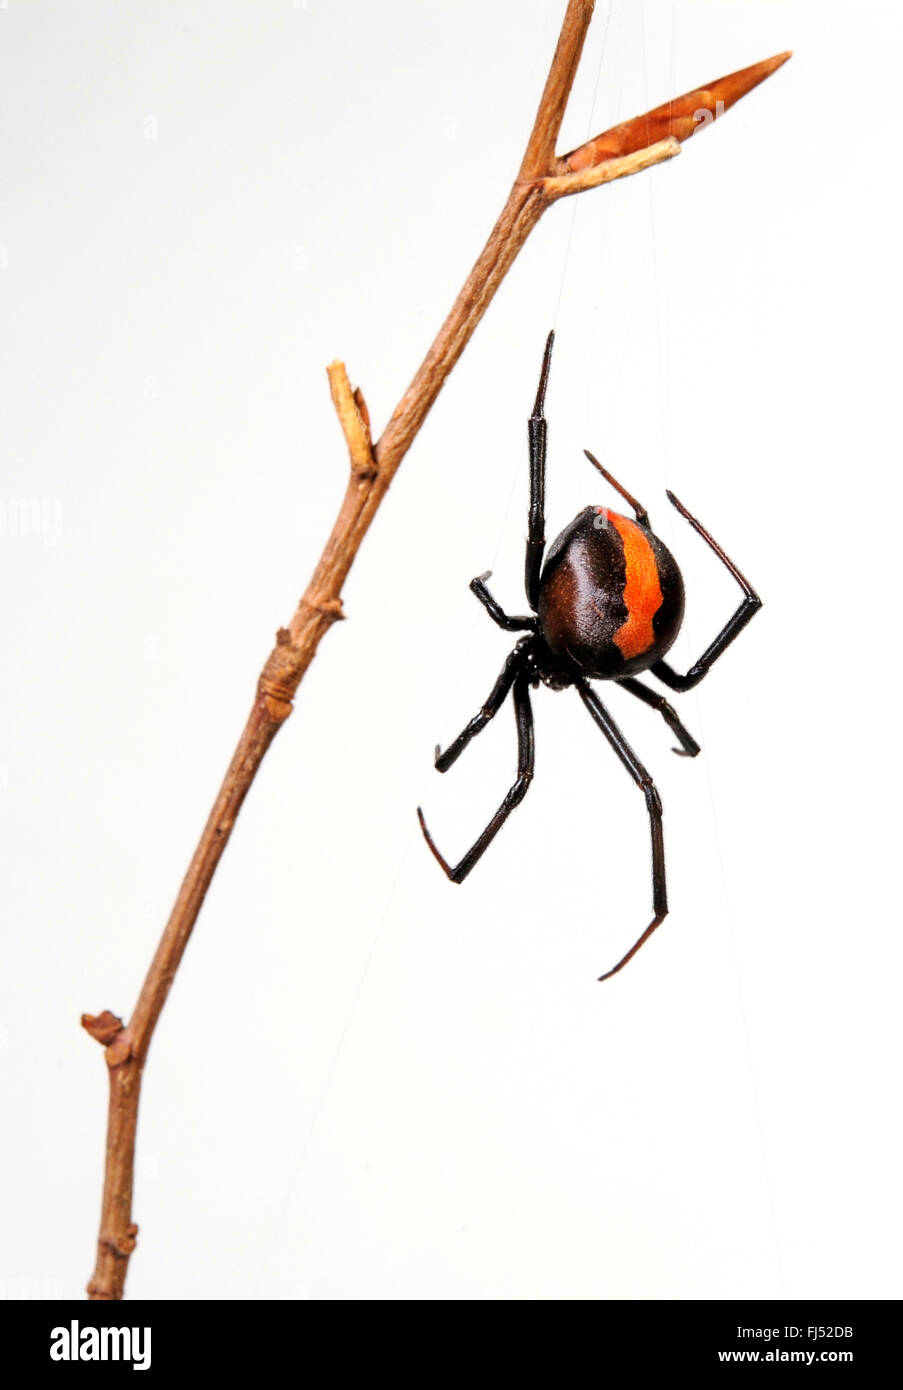 Redback spider, Widow spider, Redback (Latrodectus hasselti), infamous Redback spider from Australia, Australia Stock Photo